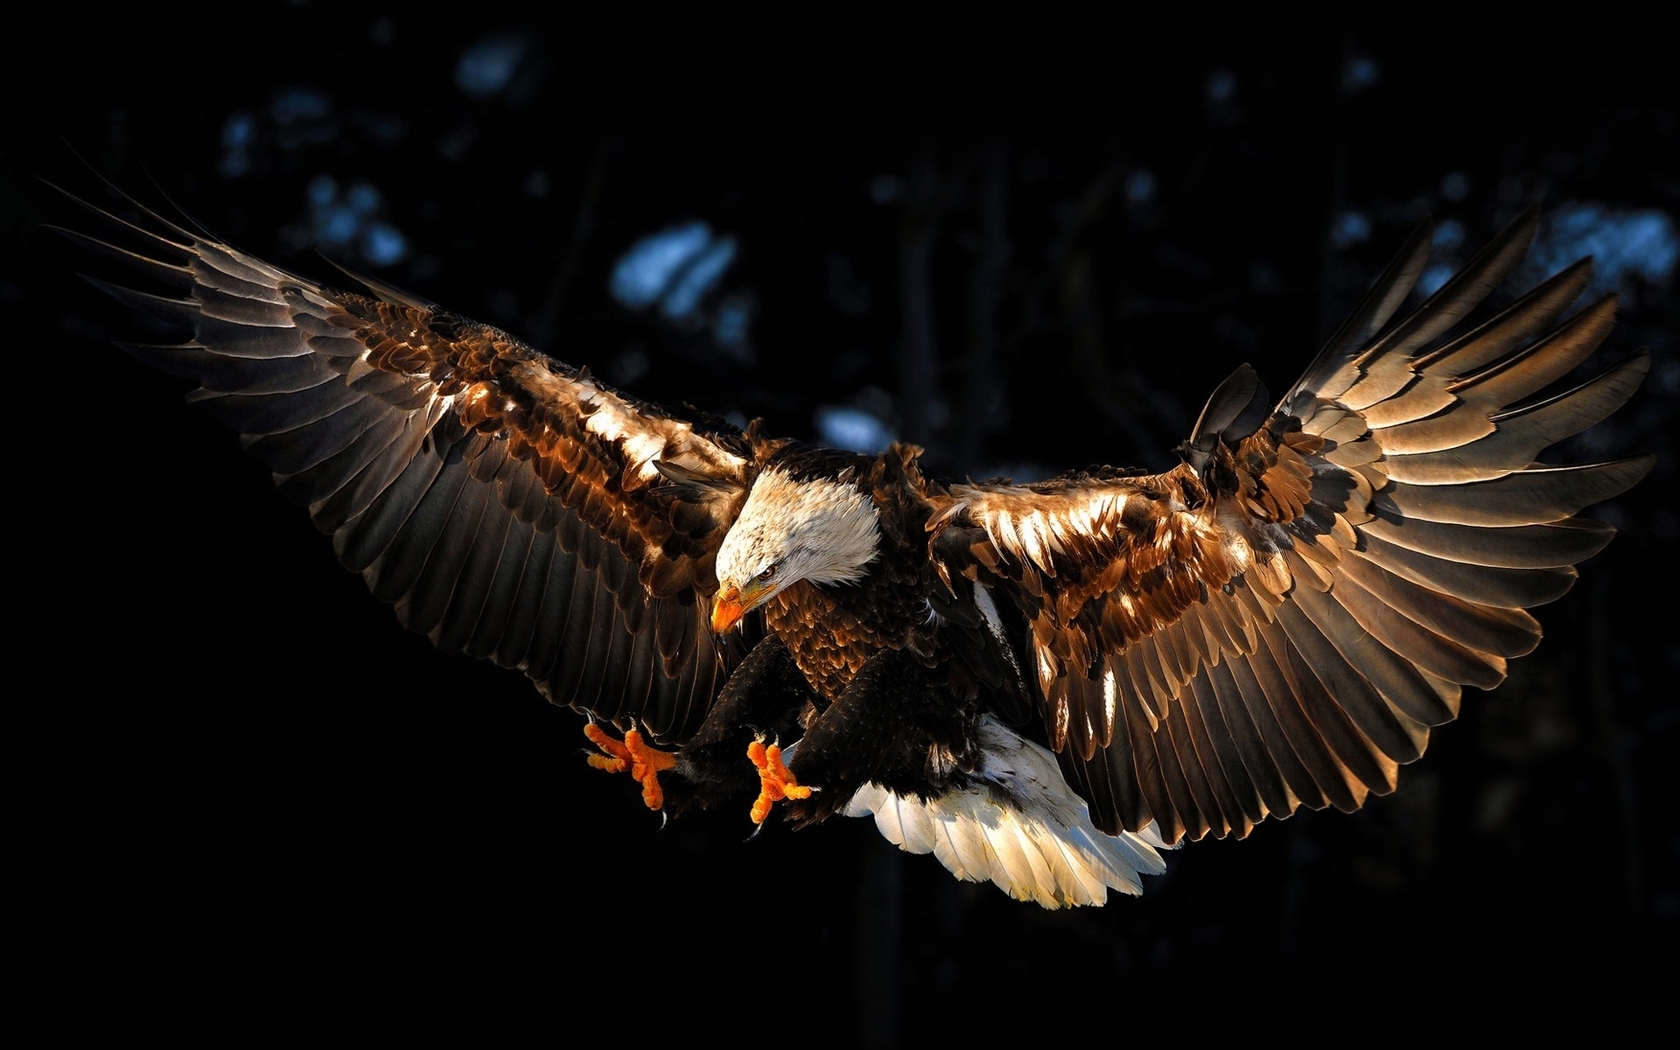 Image: Bald eagle, eagle, flying, wings, predator, bird, dark background